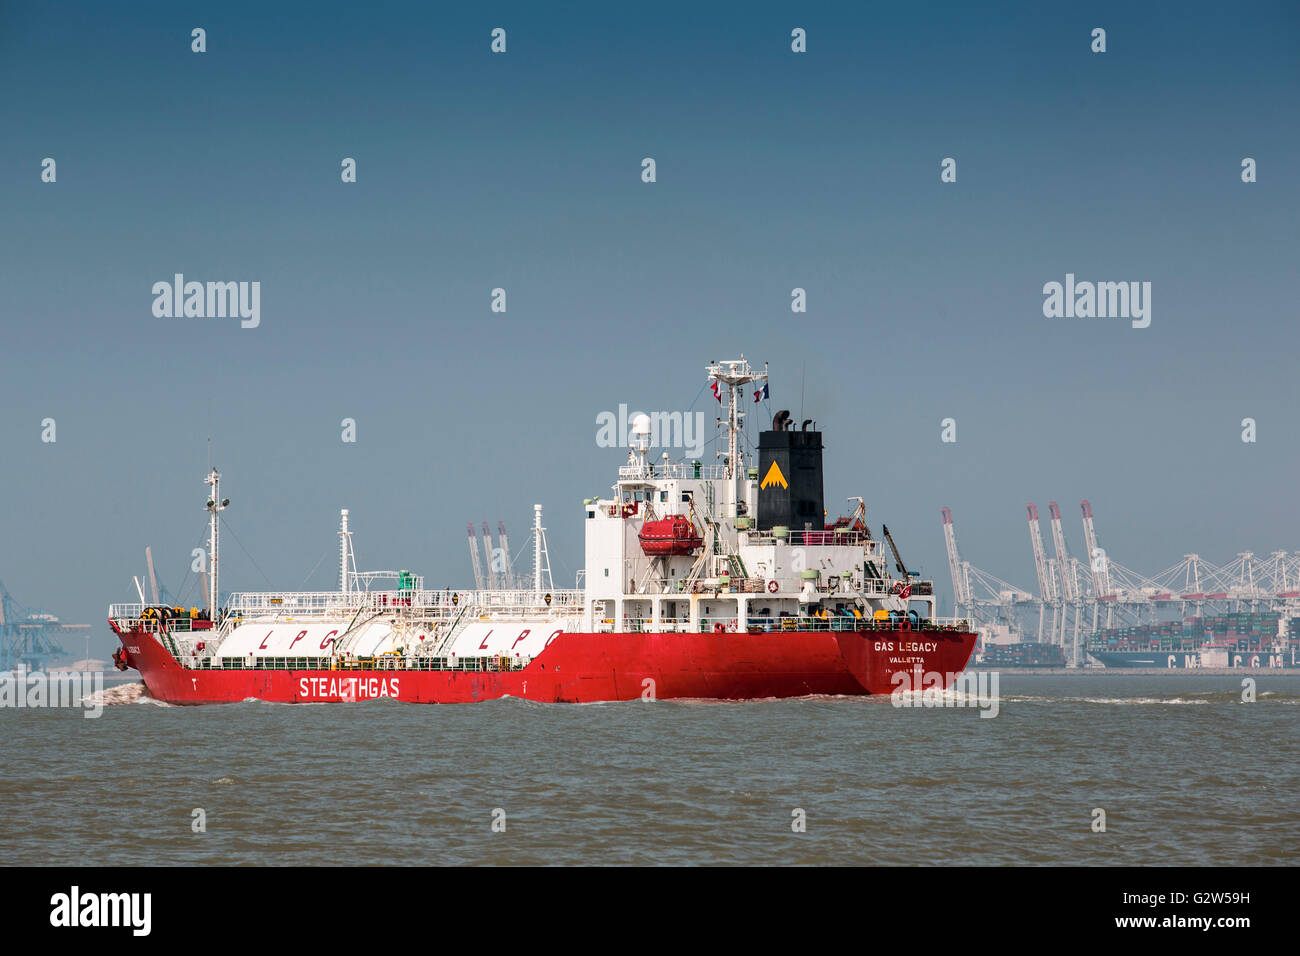 CALAIS, FRANCE - APRIL 8, 2015: LPG Gas Transport Ship leaving Calais, heading towards the English Channel Stock Photo